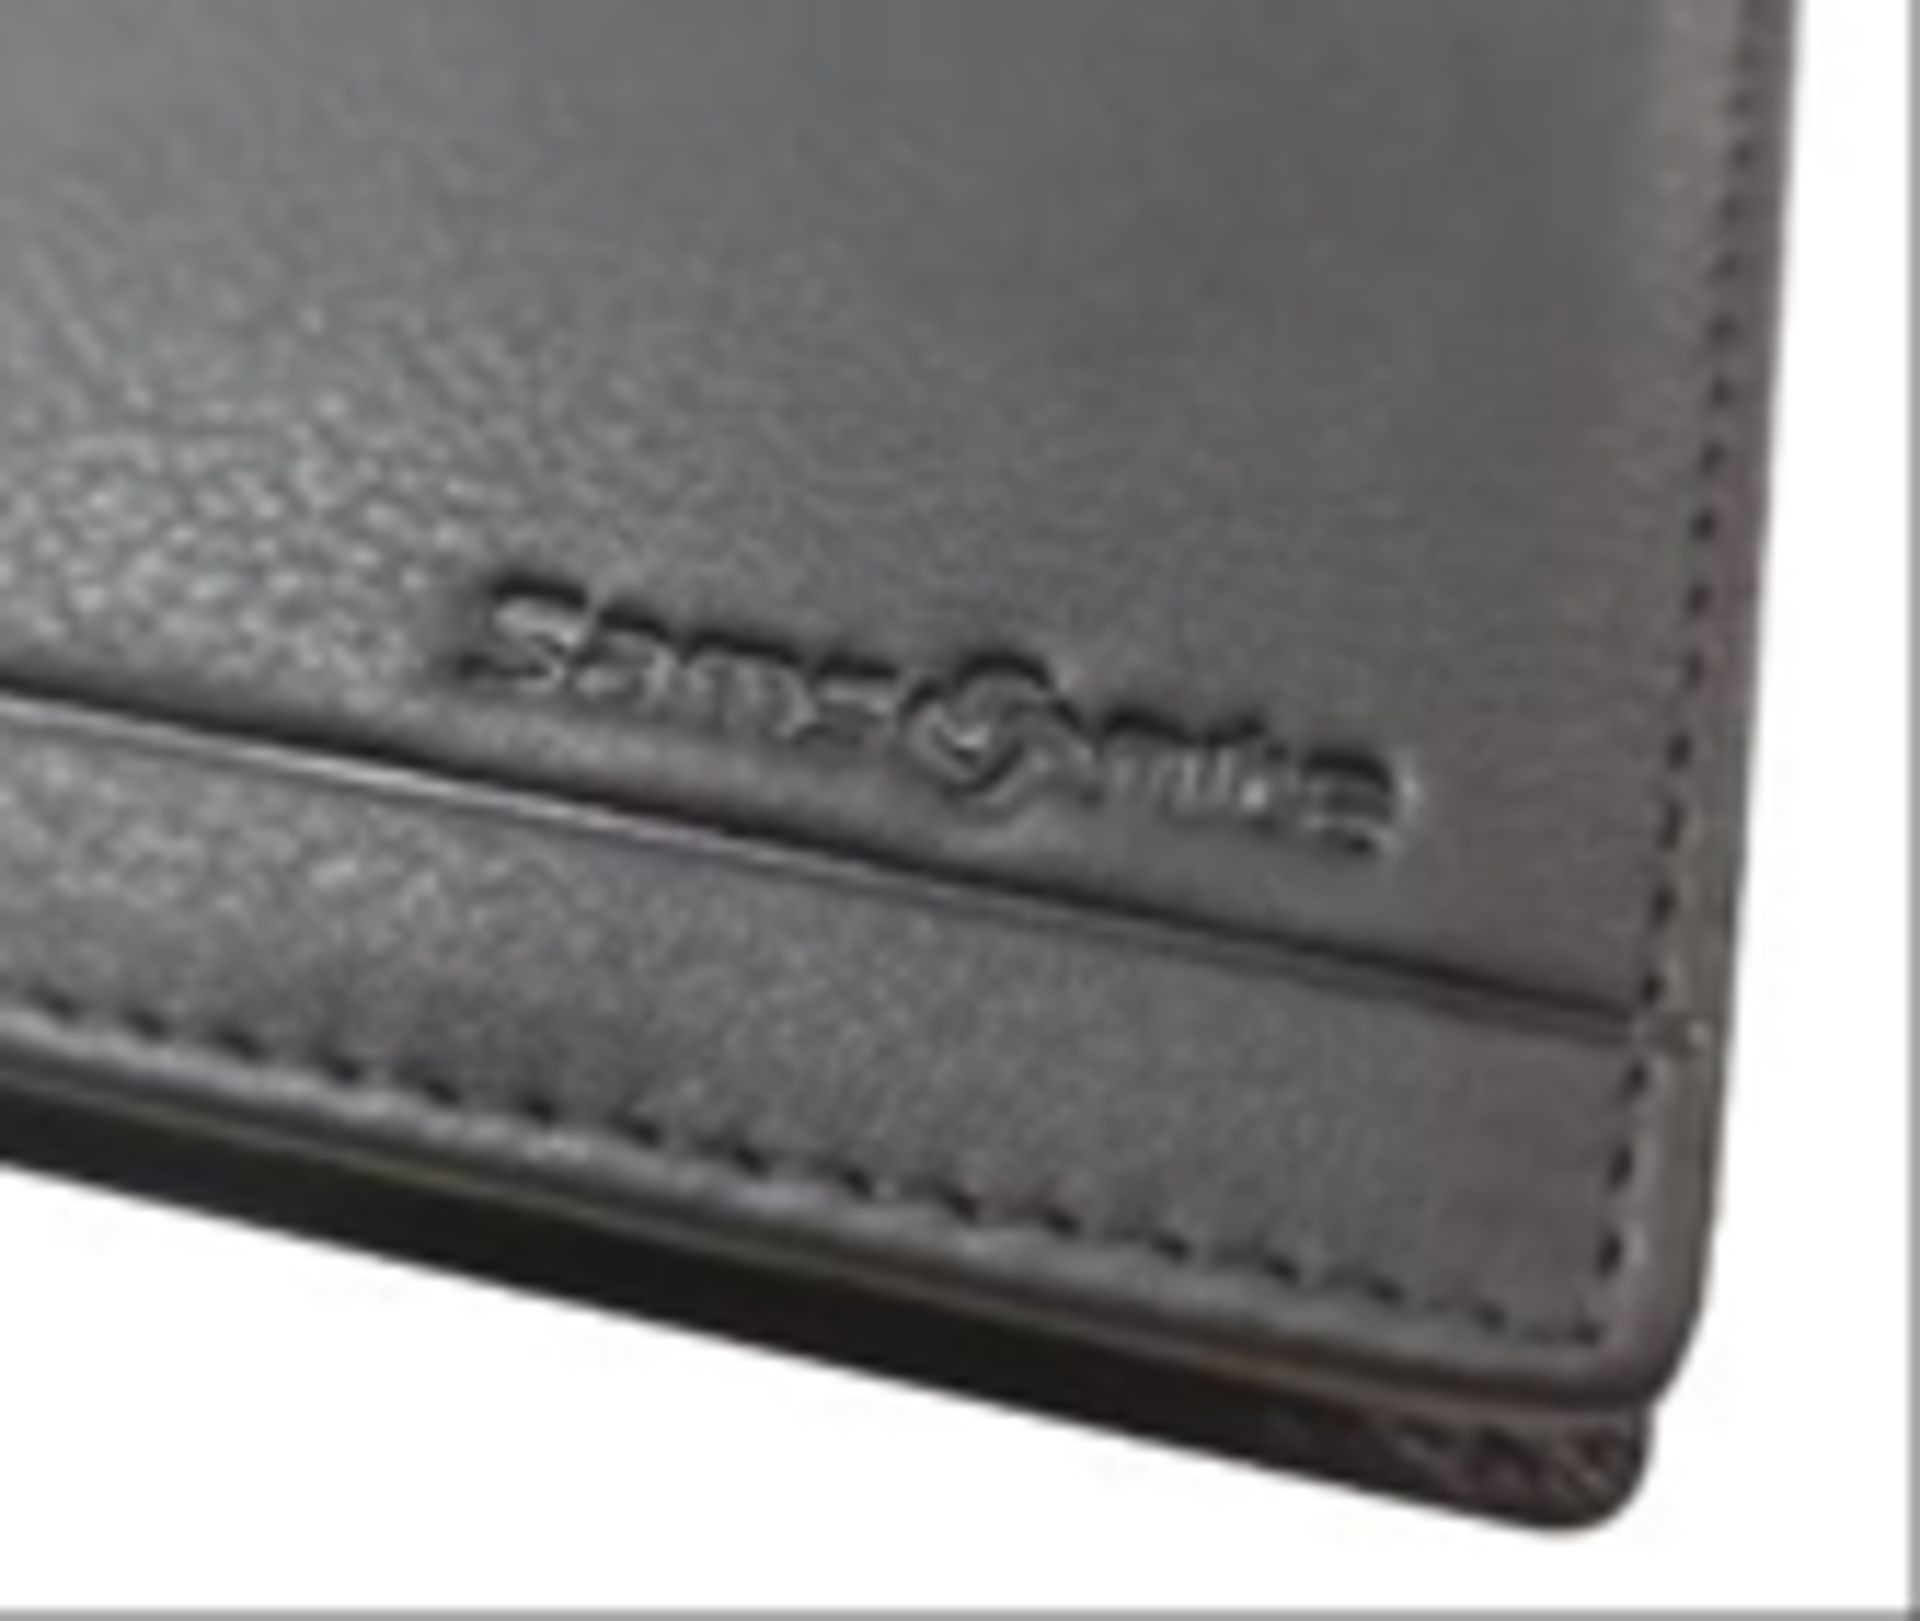 V *TRADE QTY* Brand New Samsonite Gents Black Leather Wallet - 5 Credit Card Slots 2 Larger - Image 3 of 3